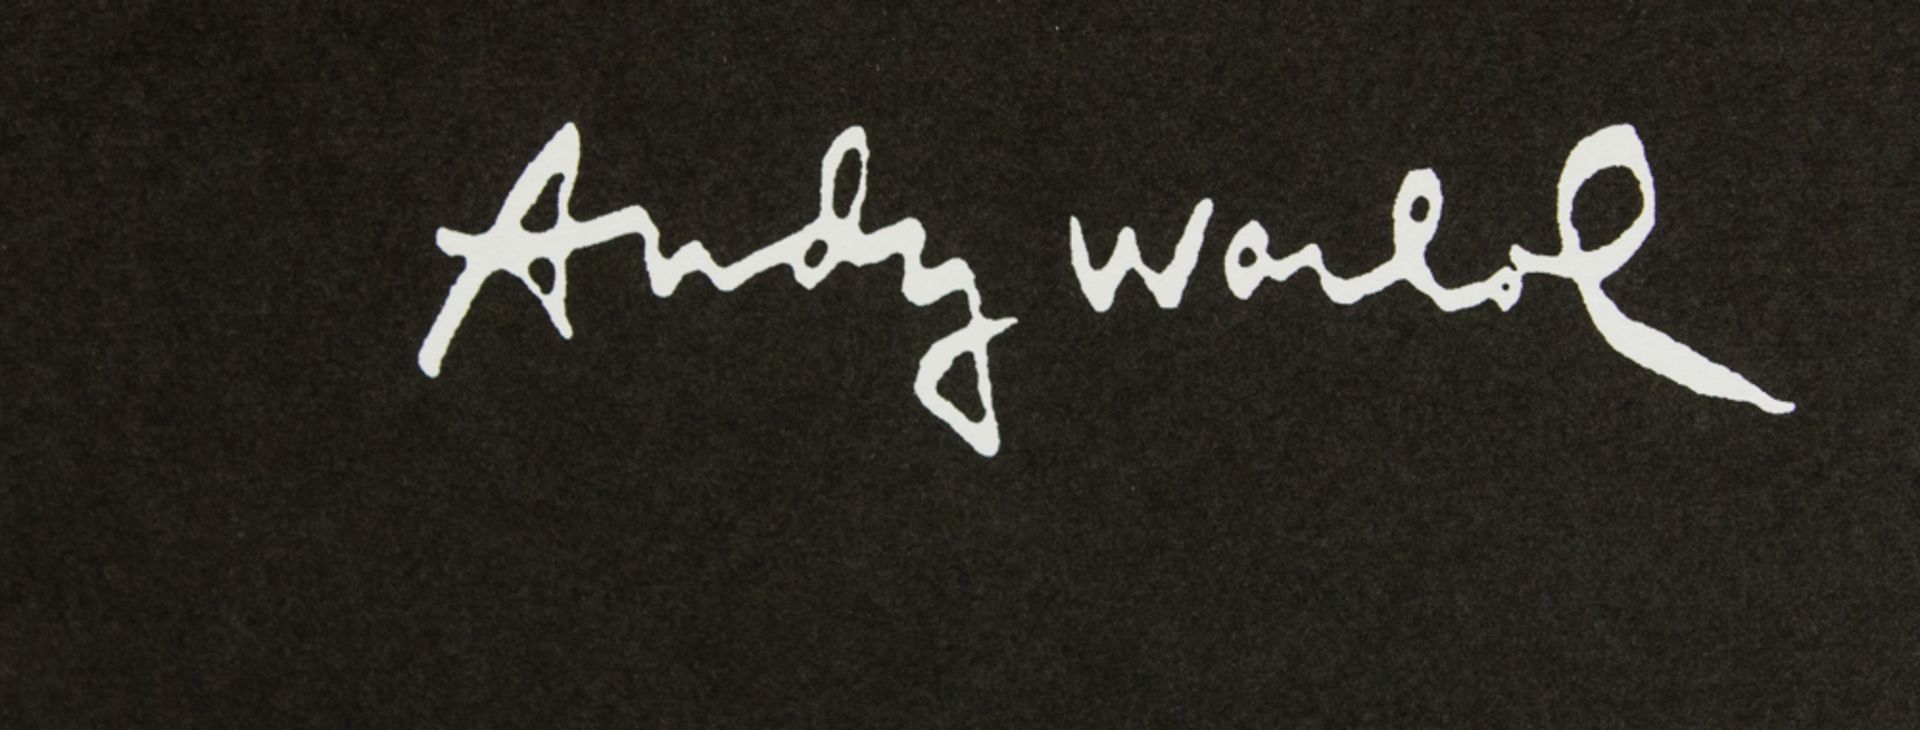 Andy Warhol 'Chanel' - Image 3 of 4